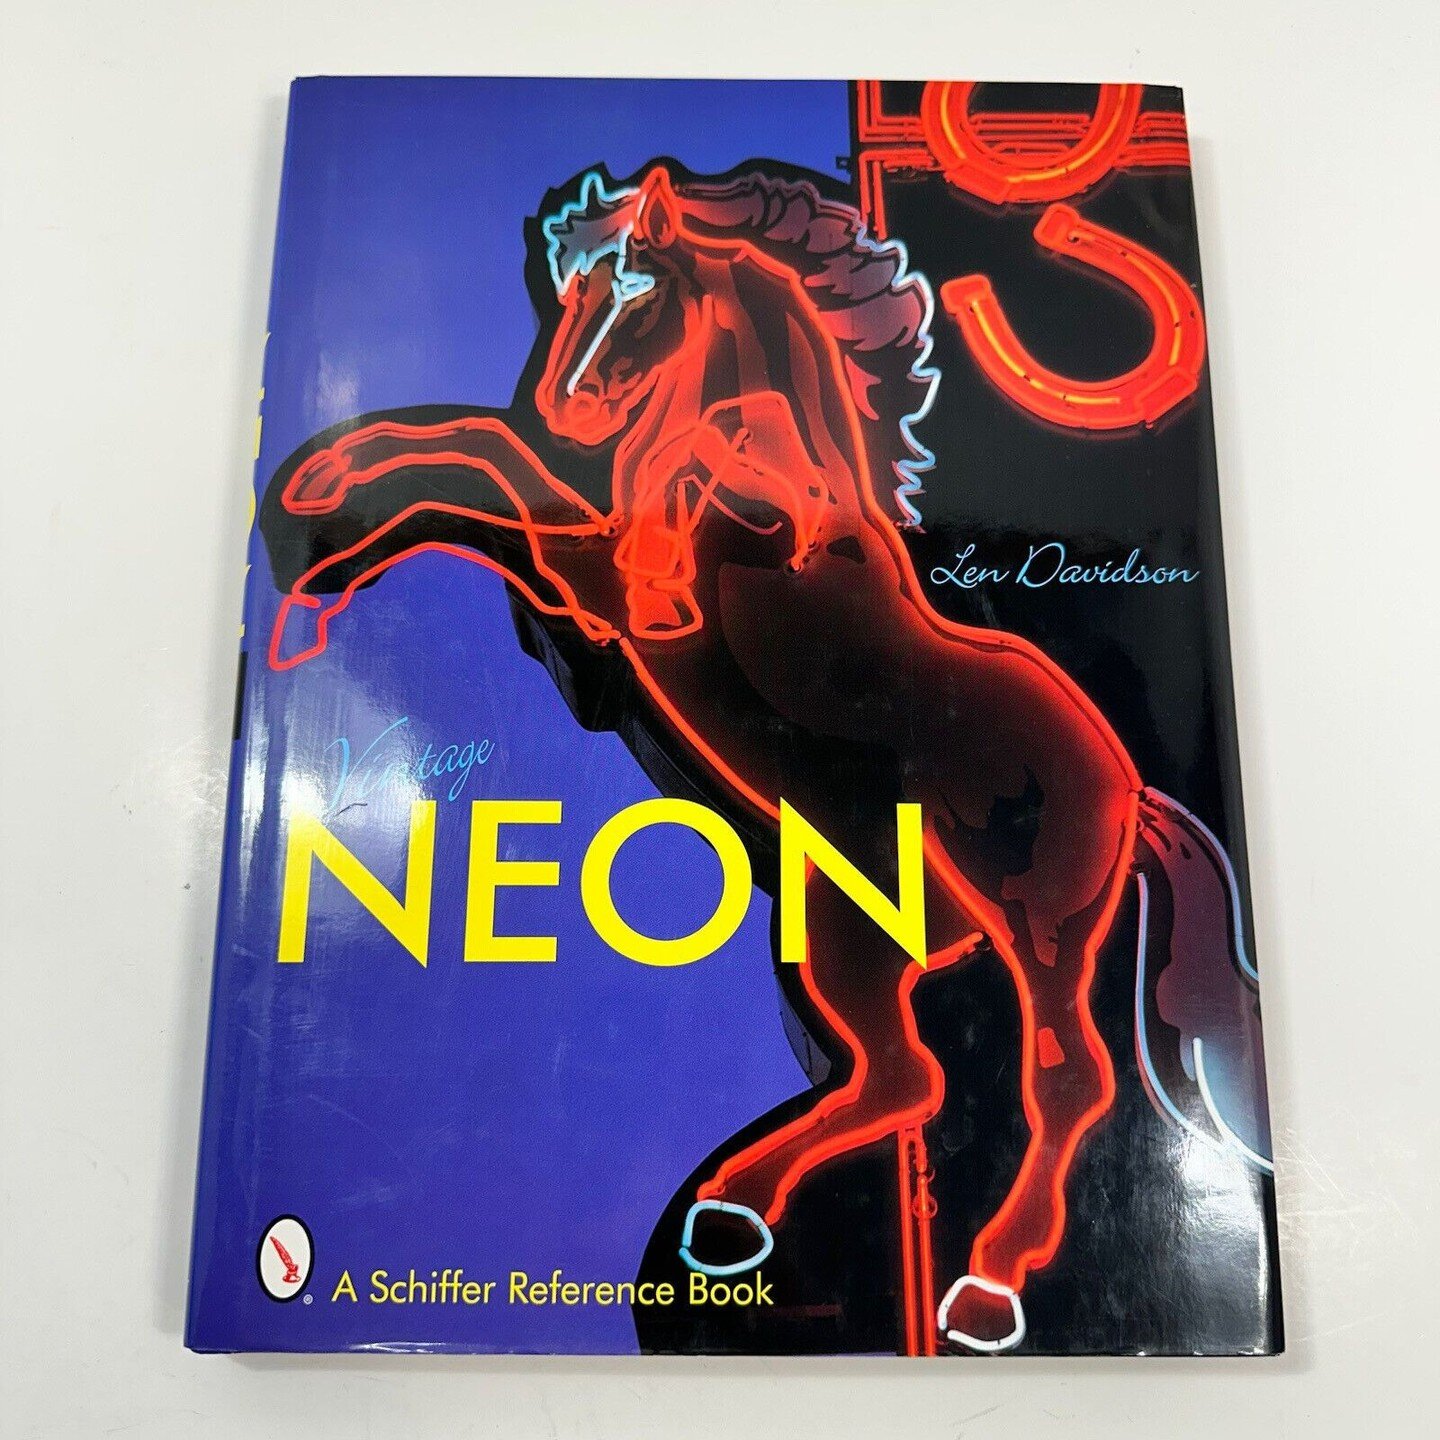 Vintage 1999 Vintage Neon Hardback Schiffer Reference Book by Len Davidson
$119.00

Good condition. 
#ebayseller 
#mercariseller 
#neon 
#neonlights 
#bookcollector